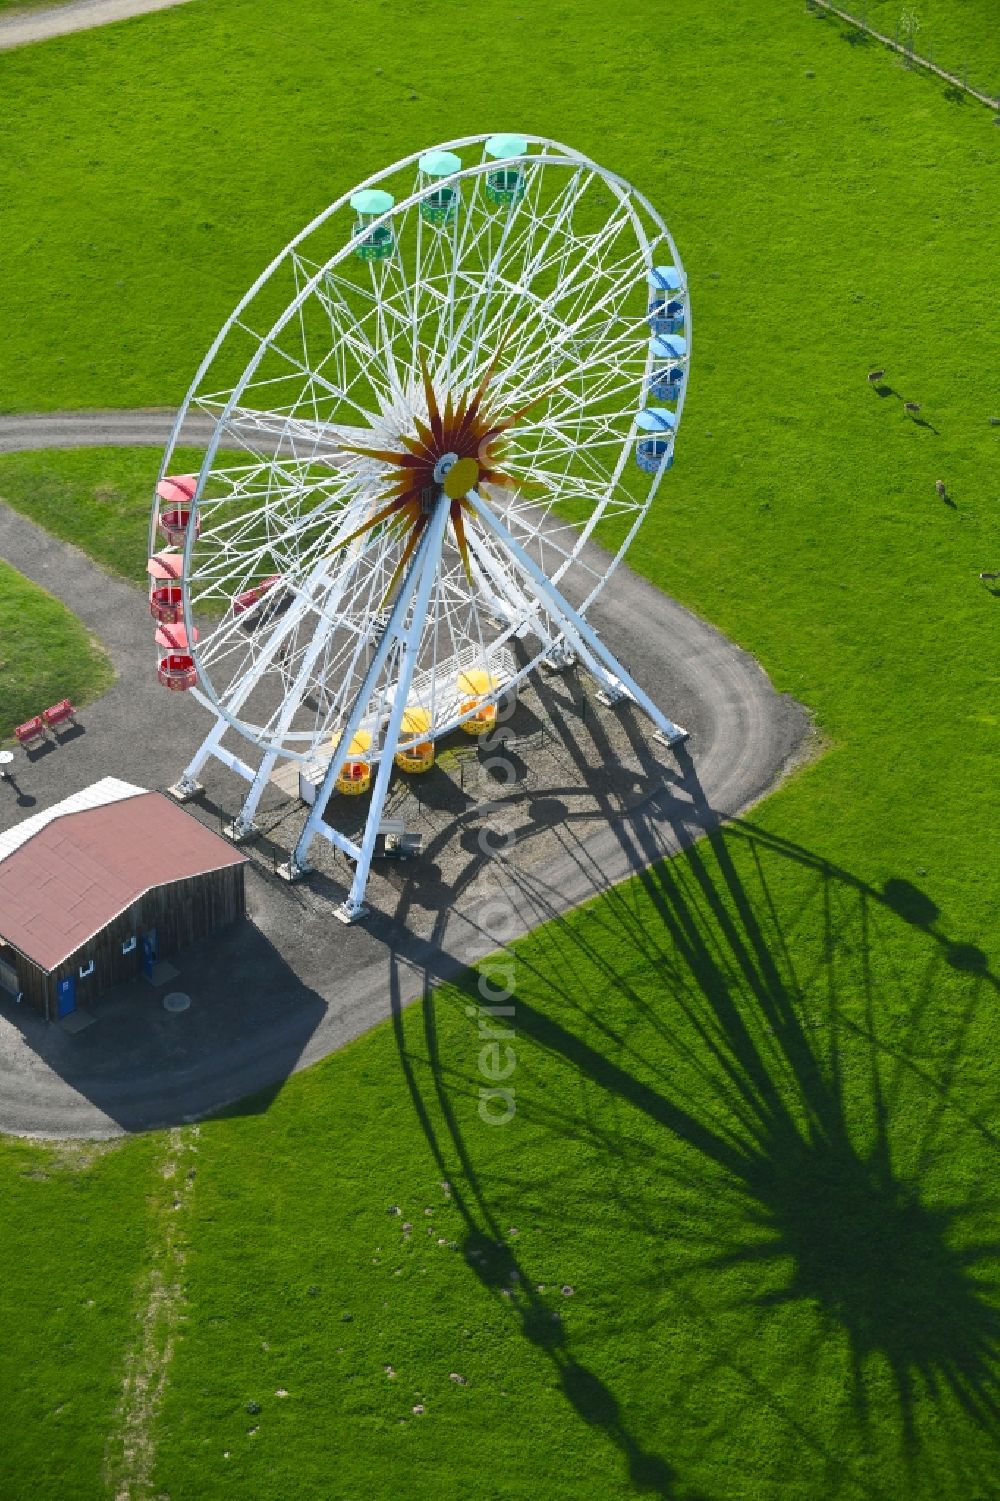 Aerial photograph Lichtenau - Leisure Centre with ferris wheel - Amusement Park of Erlebnis- and Freizeitpark Lichtenau GmbH & Co. KG on Sachsenstrasse in the district Oberlichtenau in Lichtenau in the state Saxony, Germany